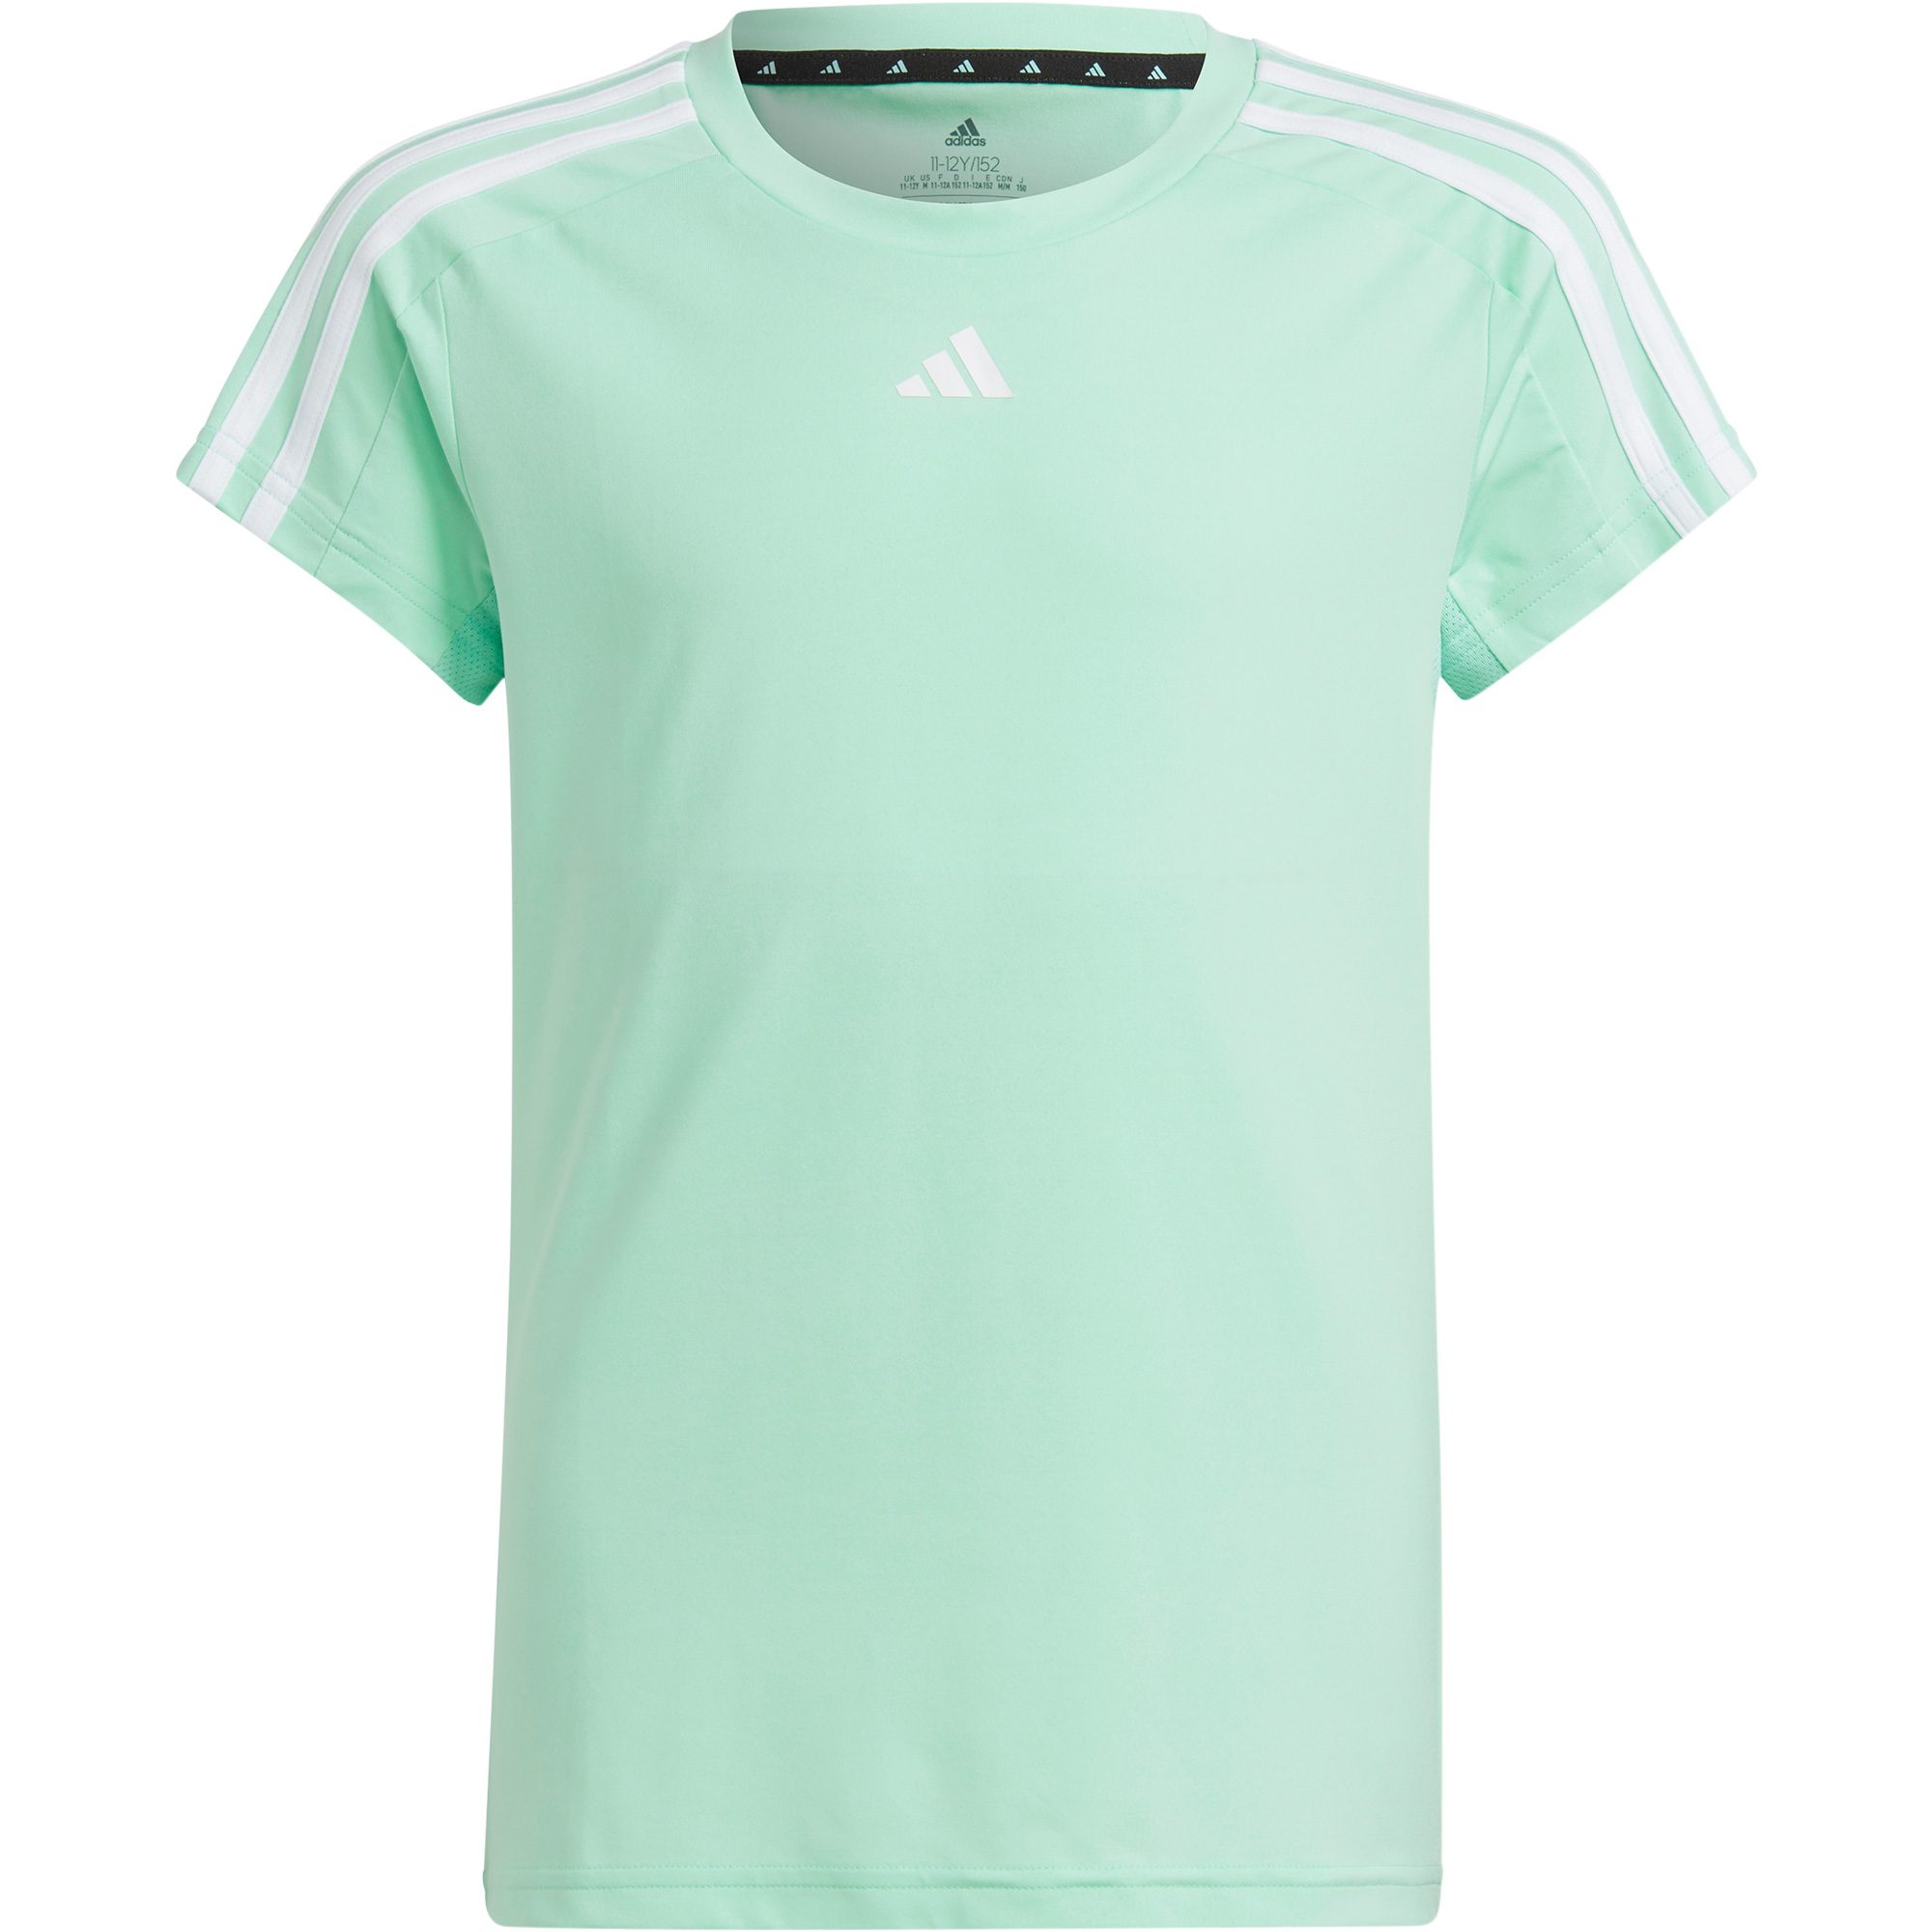 Girls 3-Stripes green - Train adidas Essentials at Bittl T-Shirt Sport Aeroready Shop easy